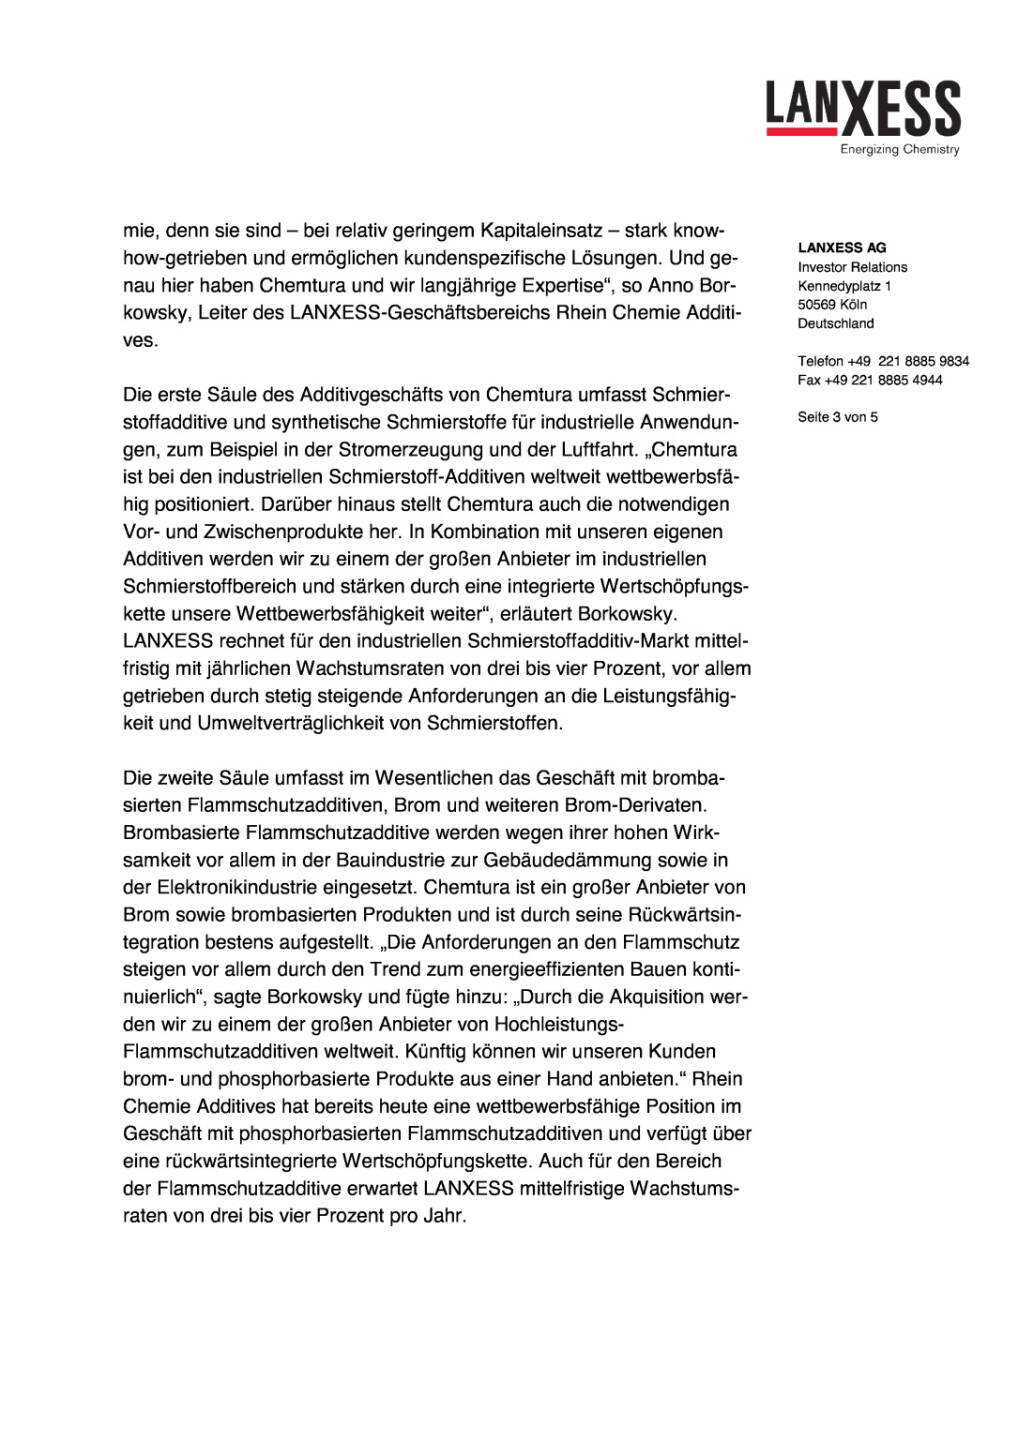 Lanxess plant Übernahme von Chemtura, Seite 3/5, komplettes Dokument unter http://boerse-social.com/static/uploads/file_1828_lanxess_plant_übernahme_von_chemtura.pdf